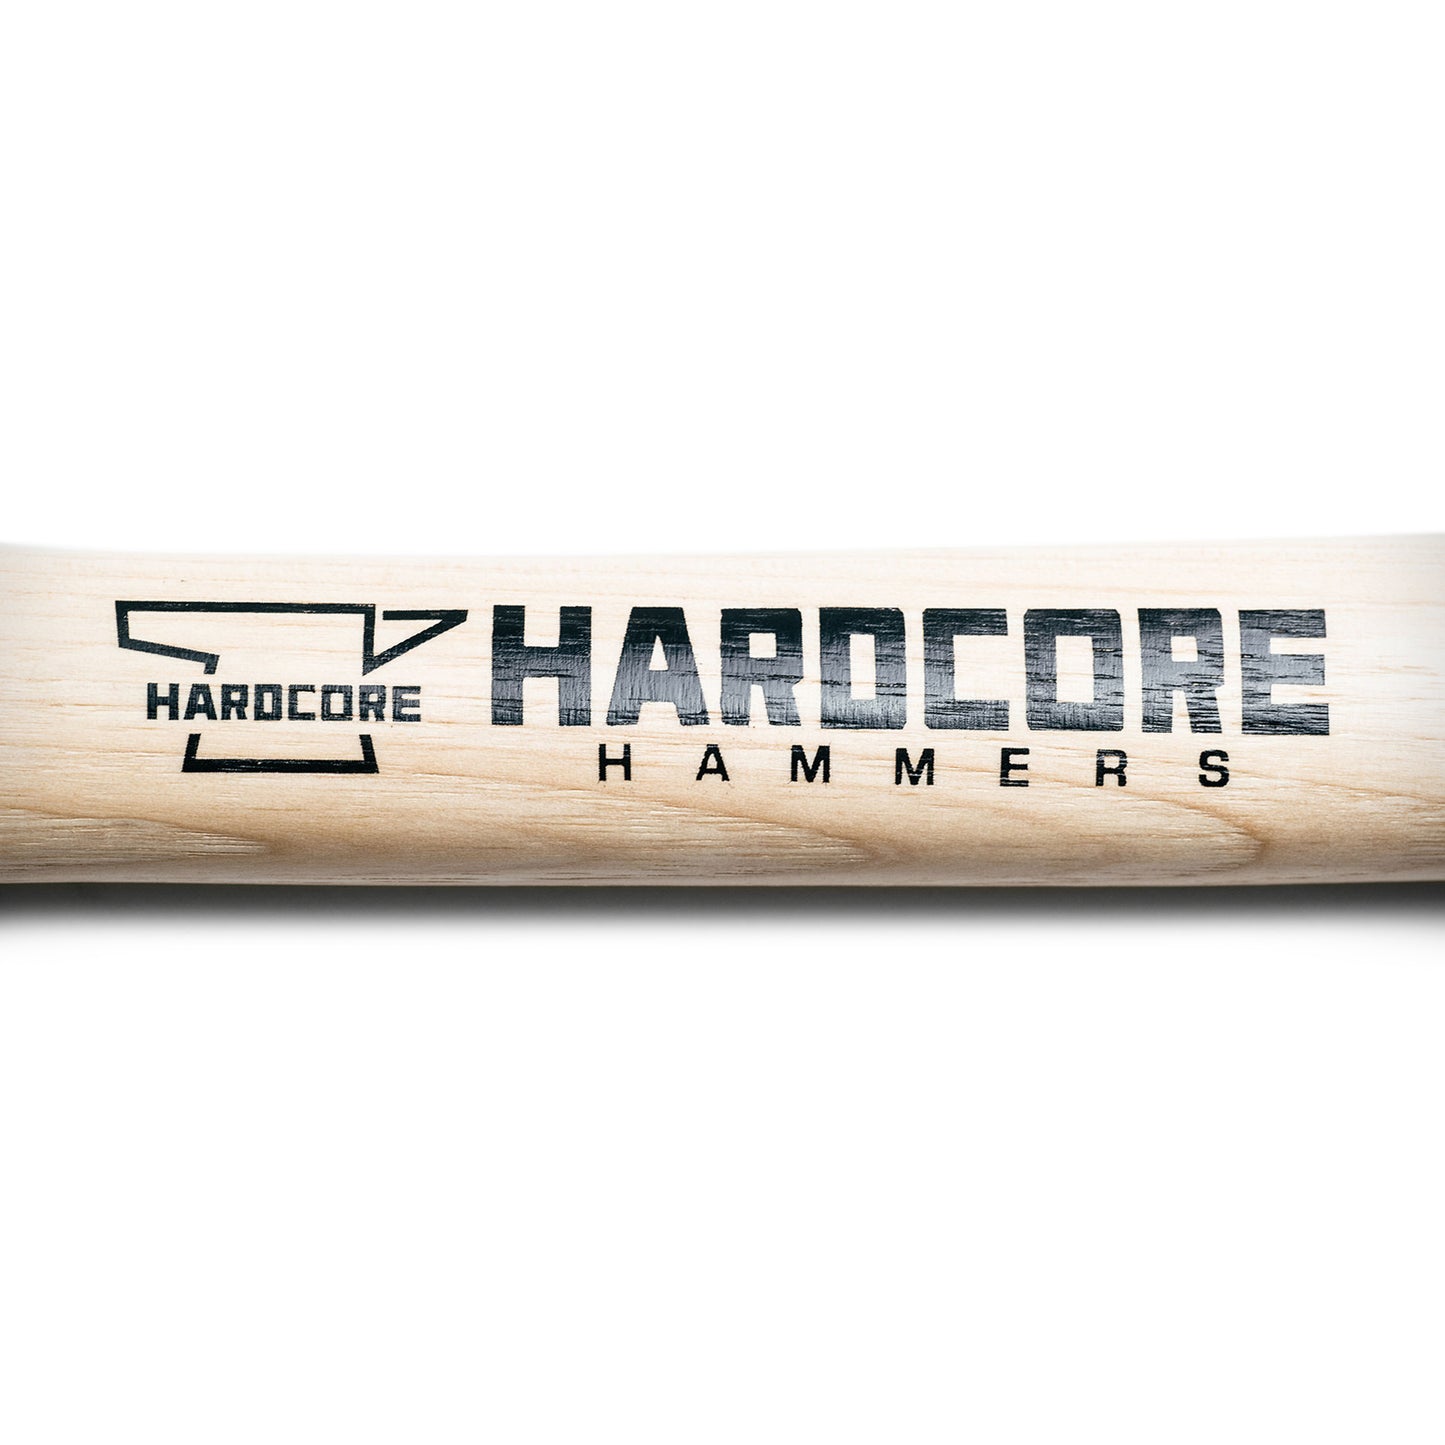 Hardcore Hammer